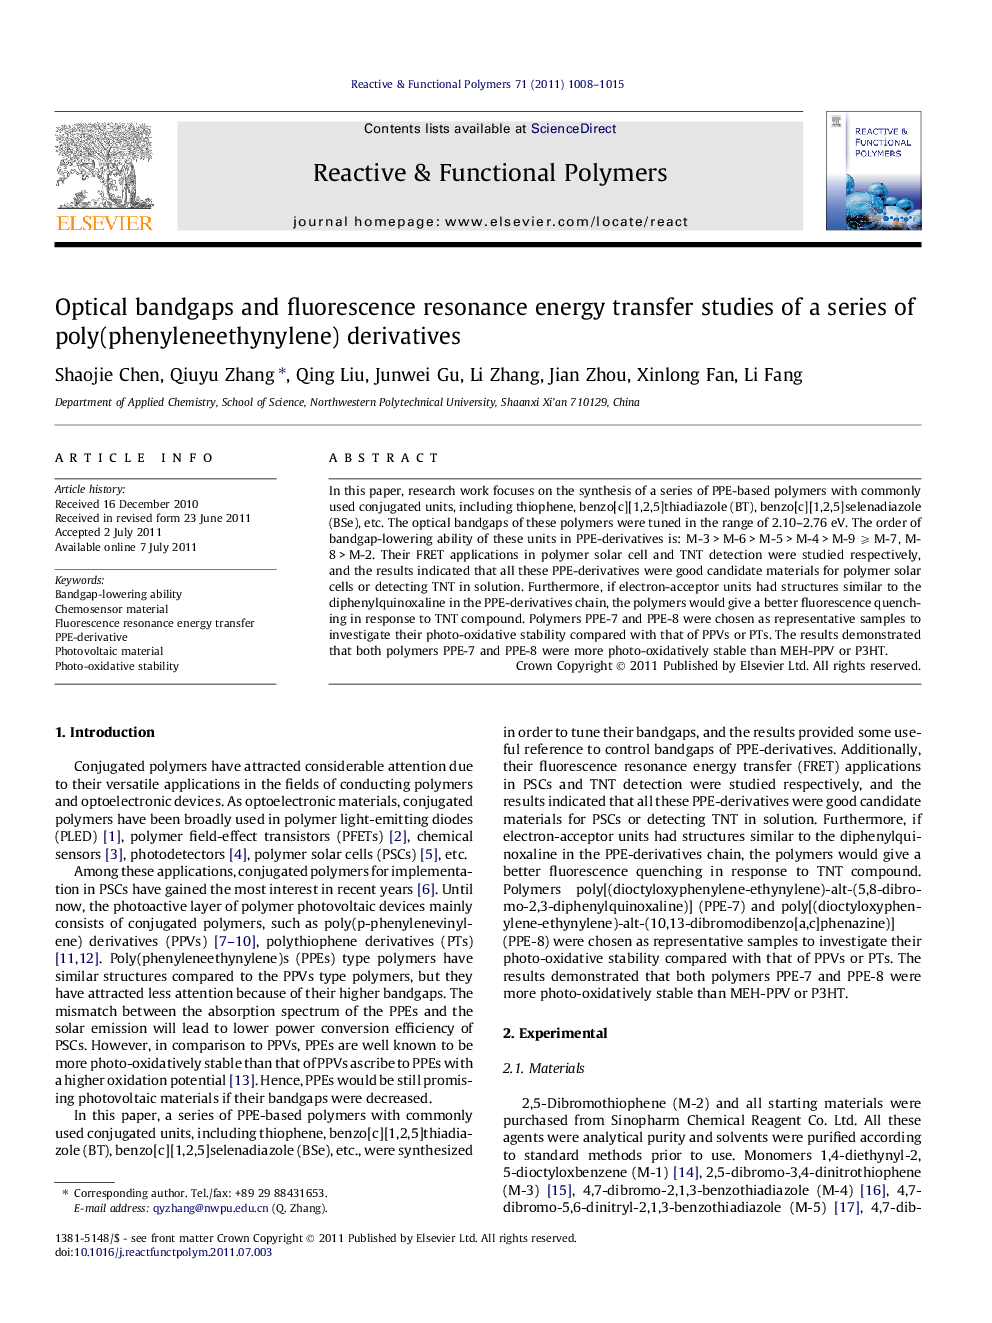 Optical bandgaps and fluorescence resonance energy transfer studies of a series of poly(phenyleneethynylene) derivatives